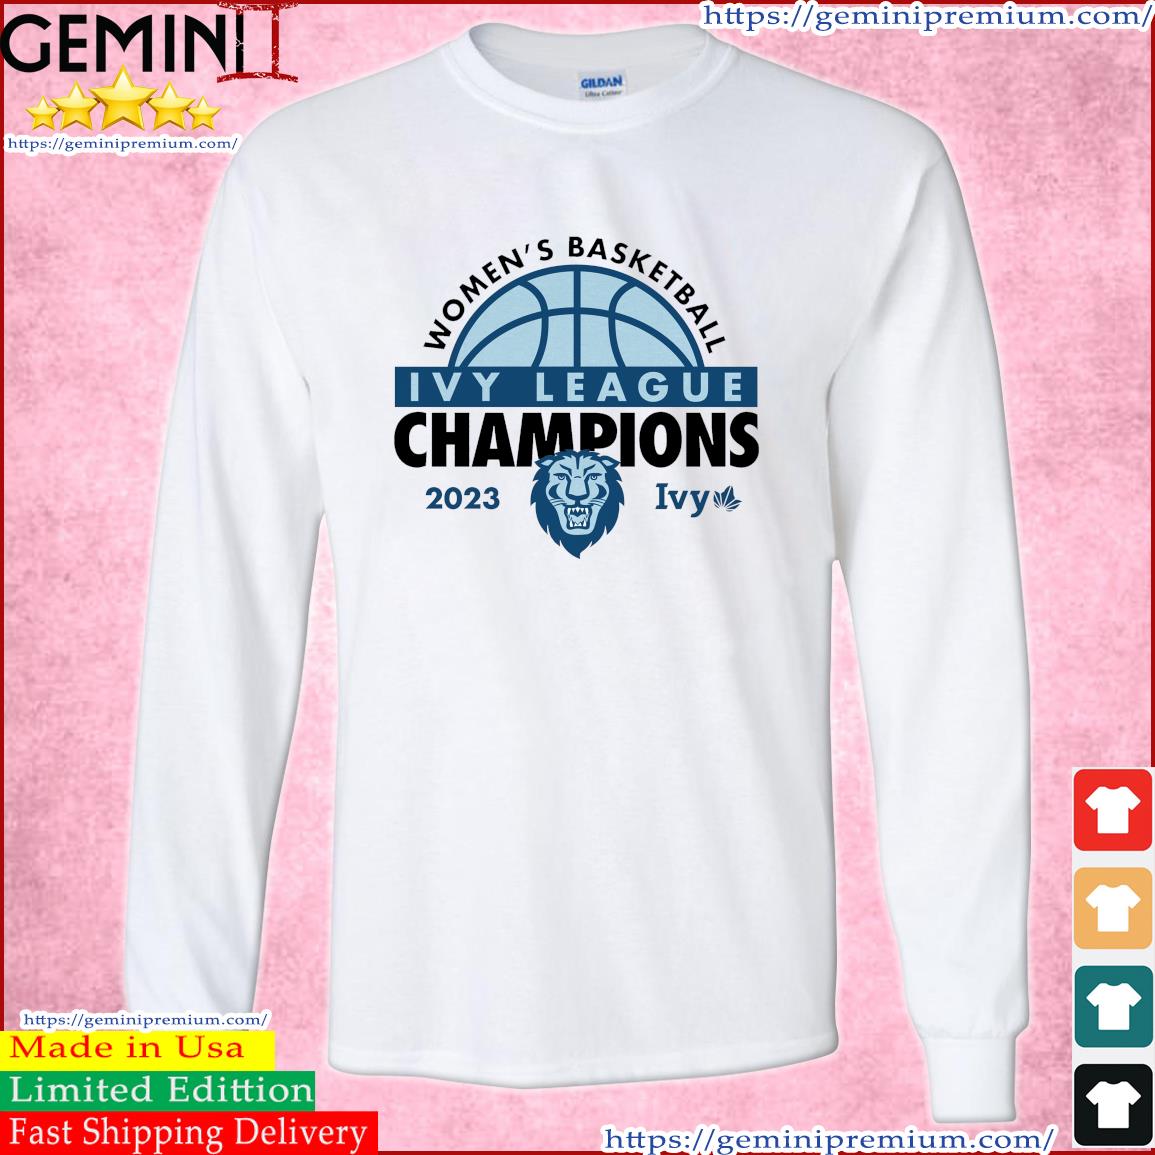 Columbia Lions Women's Basketball Regular Season Champions 2023 Shirt Long Sleeve Tee